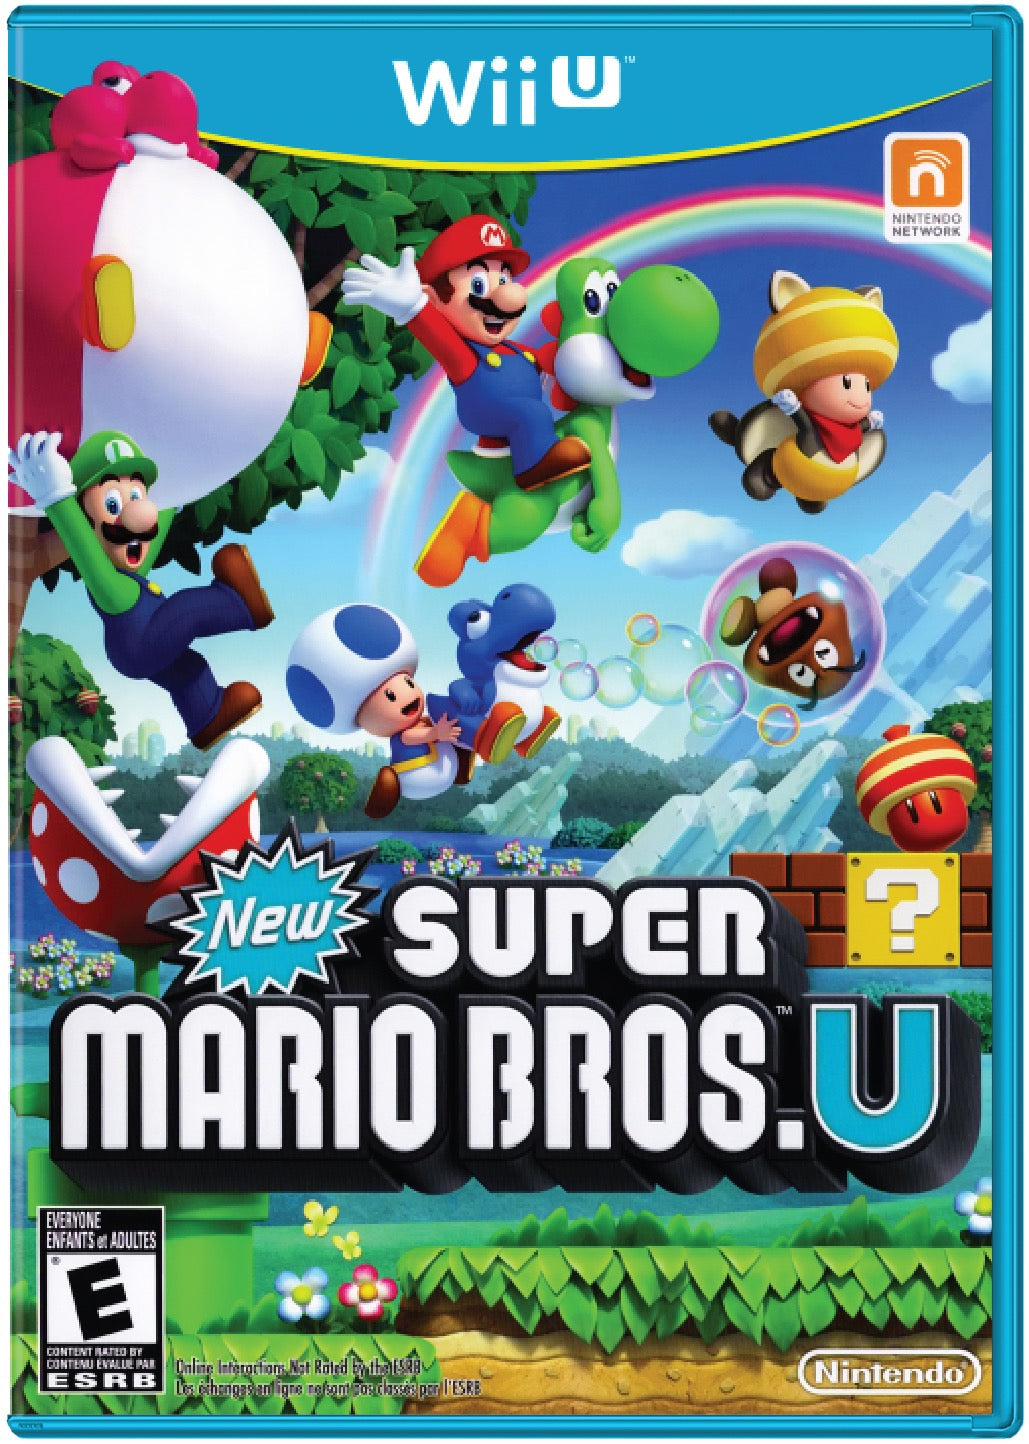 New Super Mario Bros. U Cover Art and Product Photo